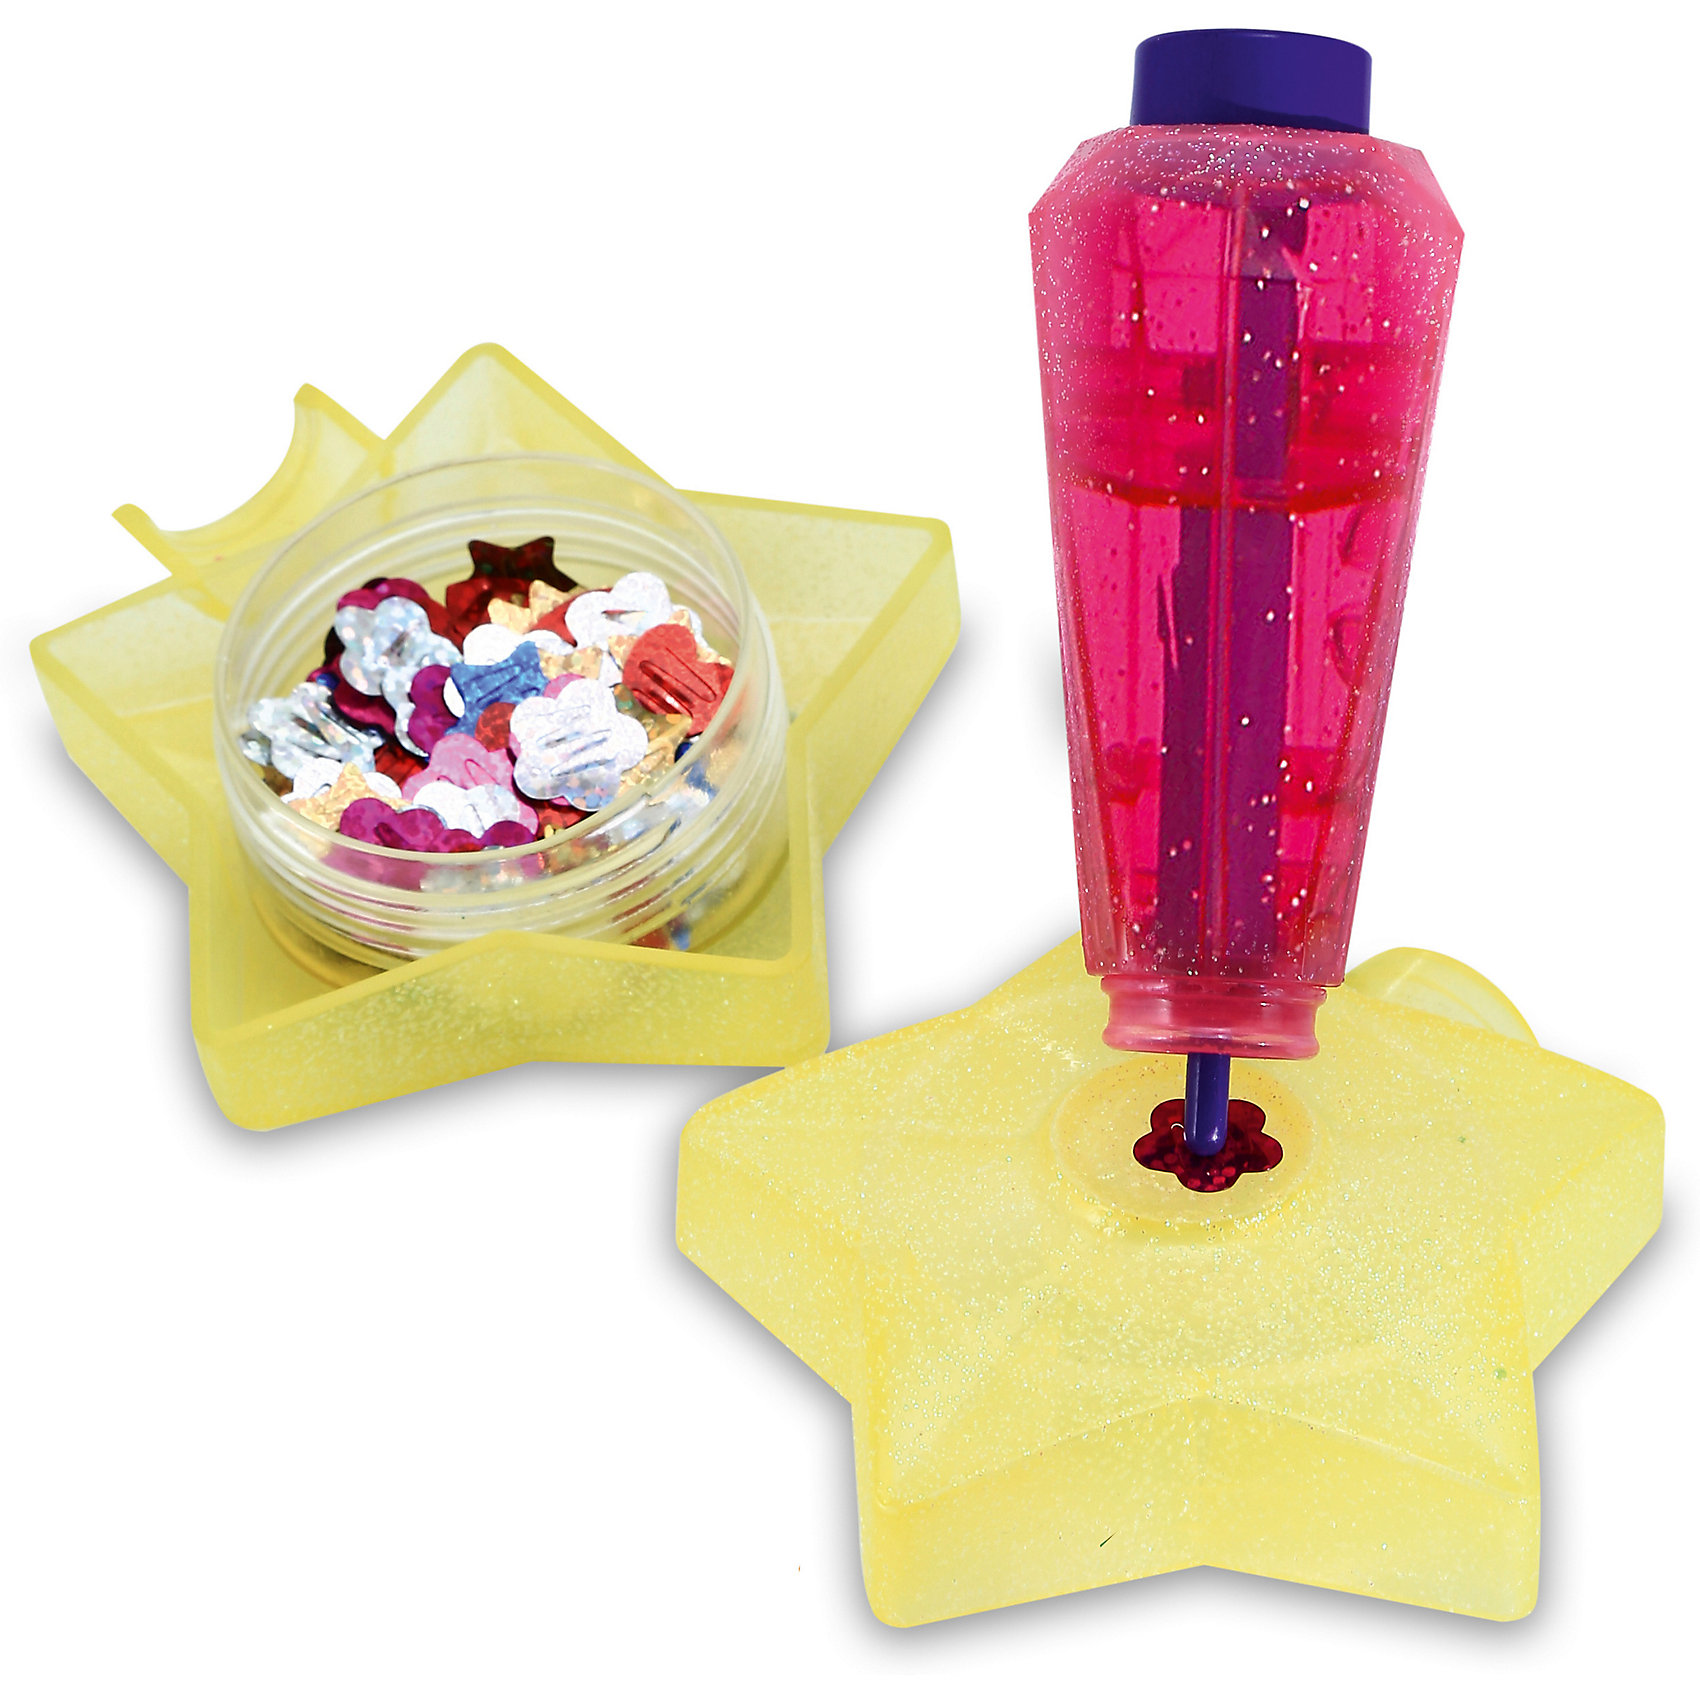 фото Мягкая игрушка Shimmer Stars Панда с сумочкой, 20 см